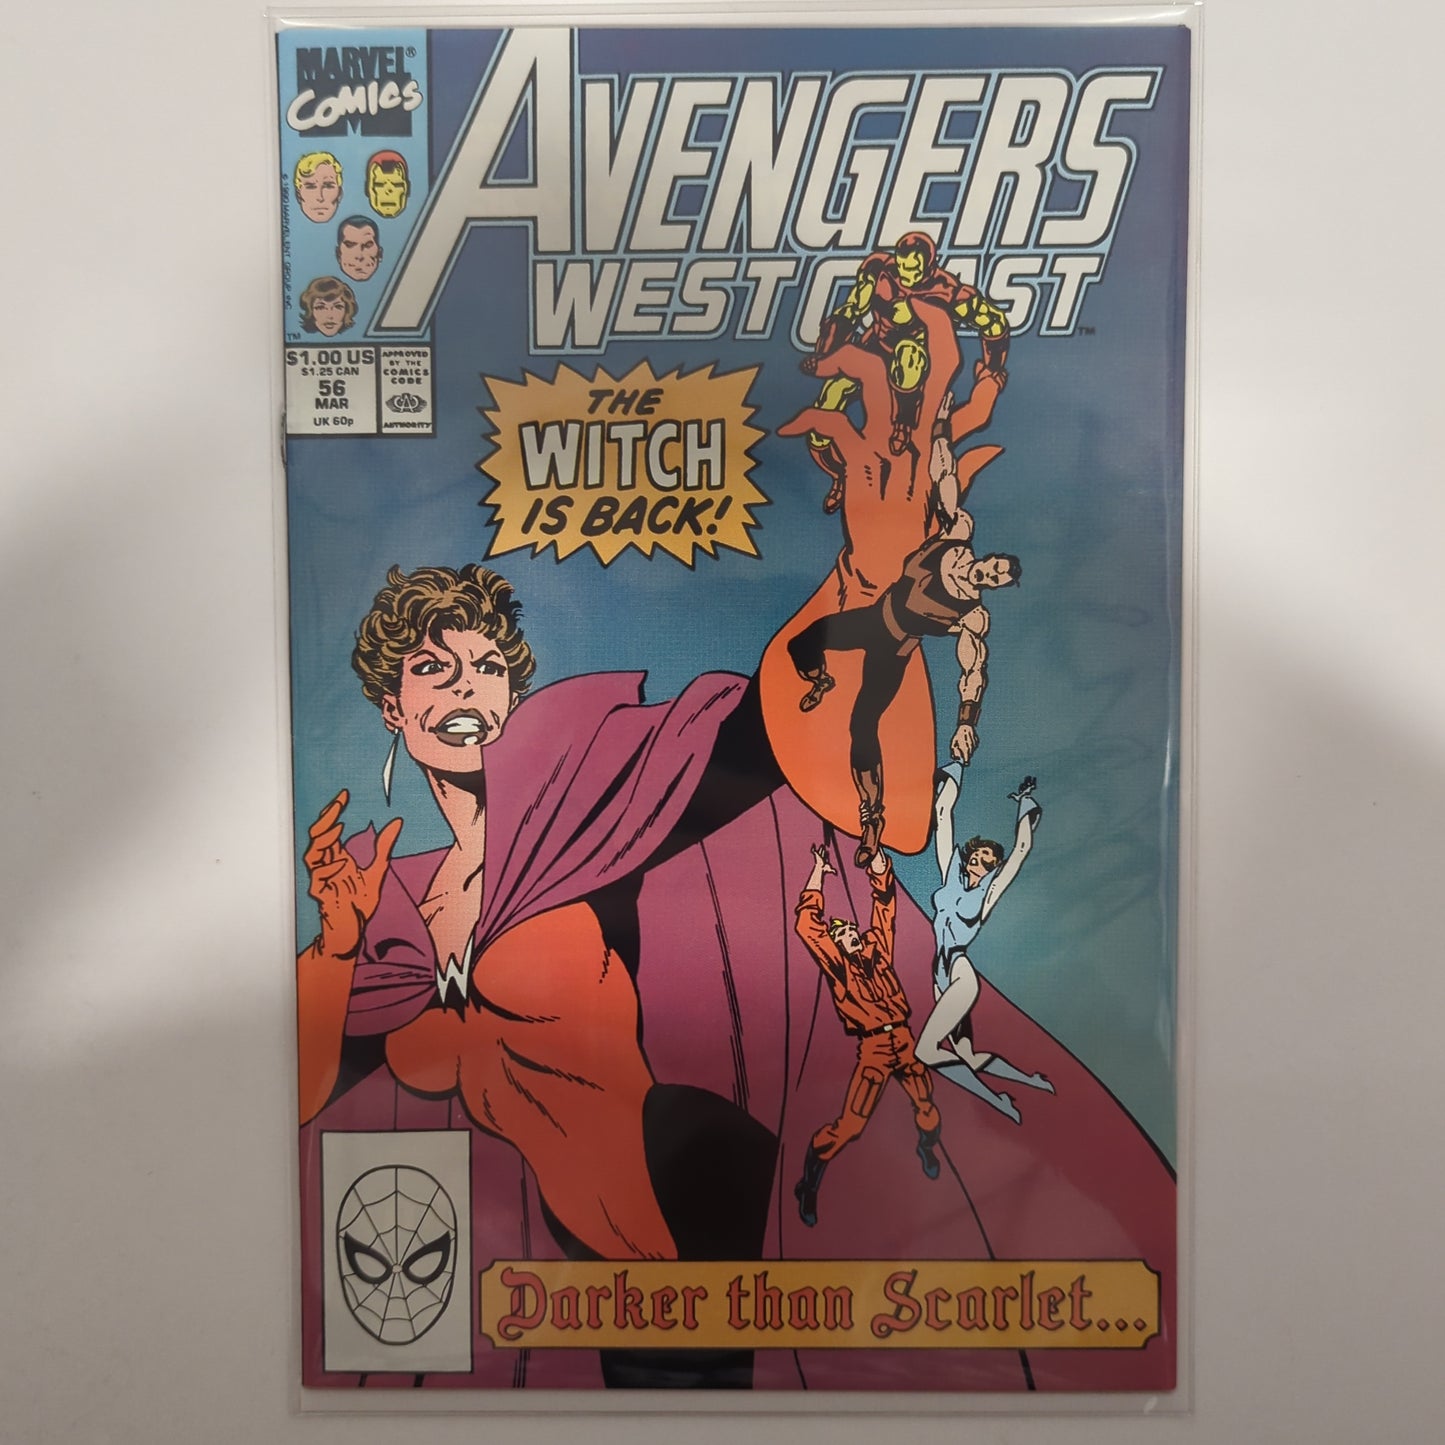 The West Coast Avengers #56